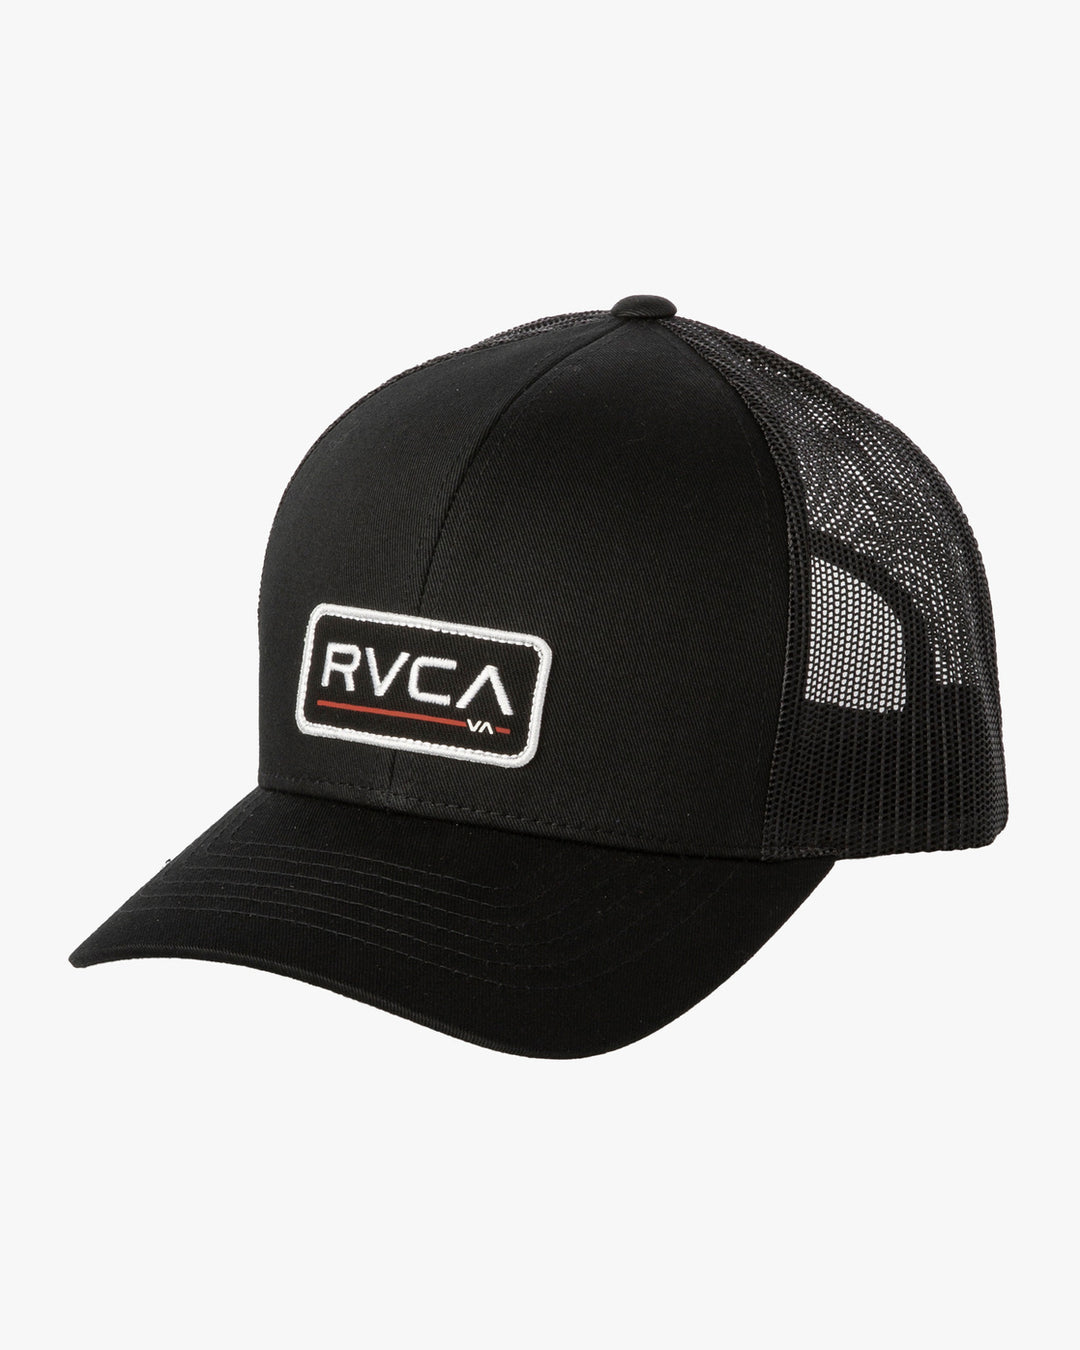 RVCA Ticket Trucker III Hat - Black Black - Sun Diego Boardshop